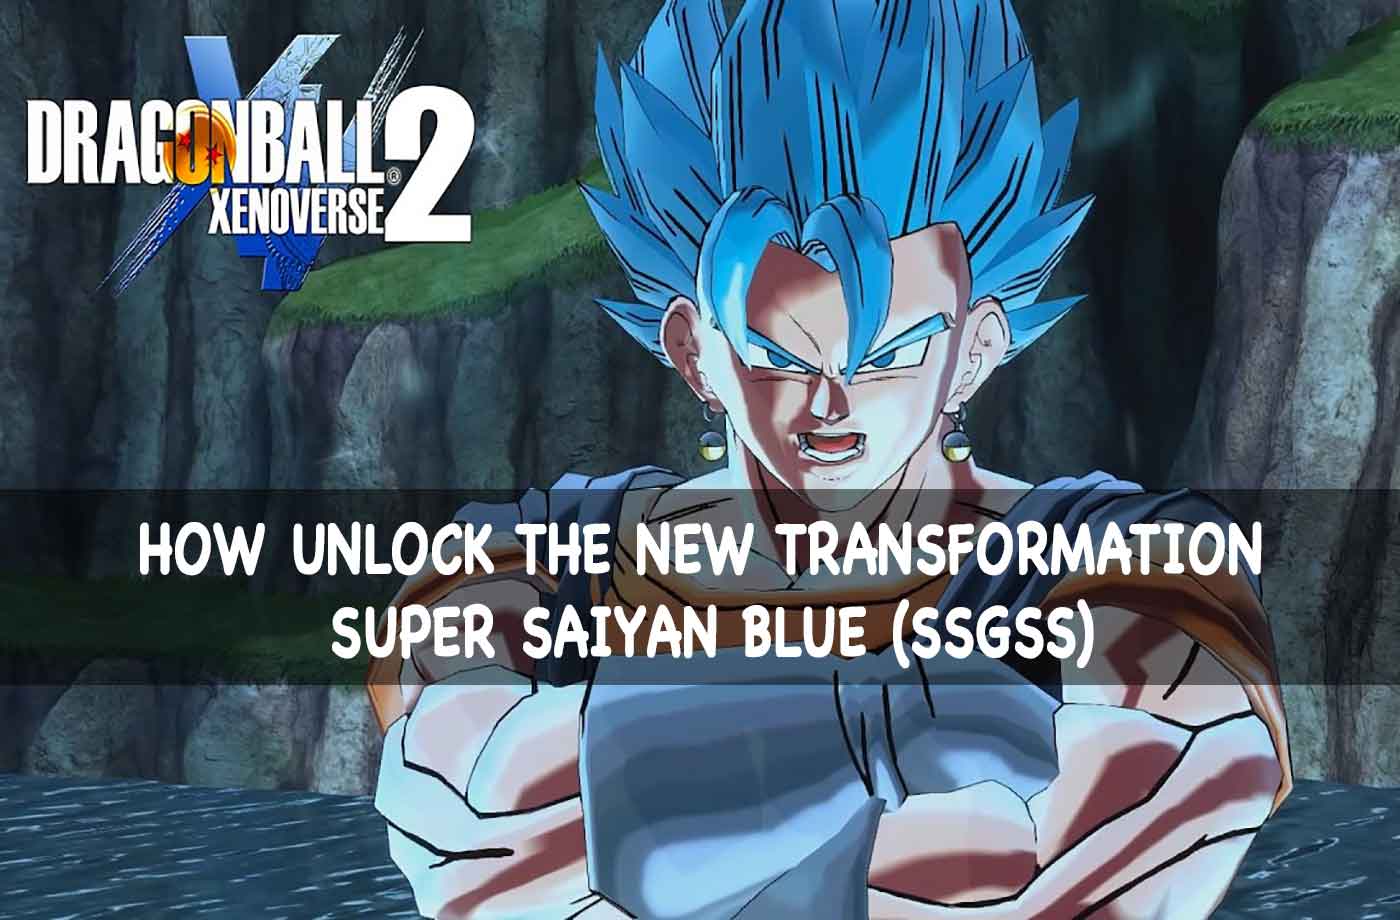 Guide Dragon Ball Xenoverse 2 How To Unlock The Super Saiyan Blue Ssgss Kill The Game